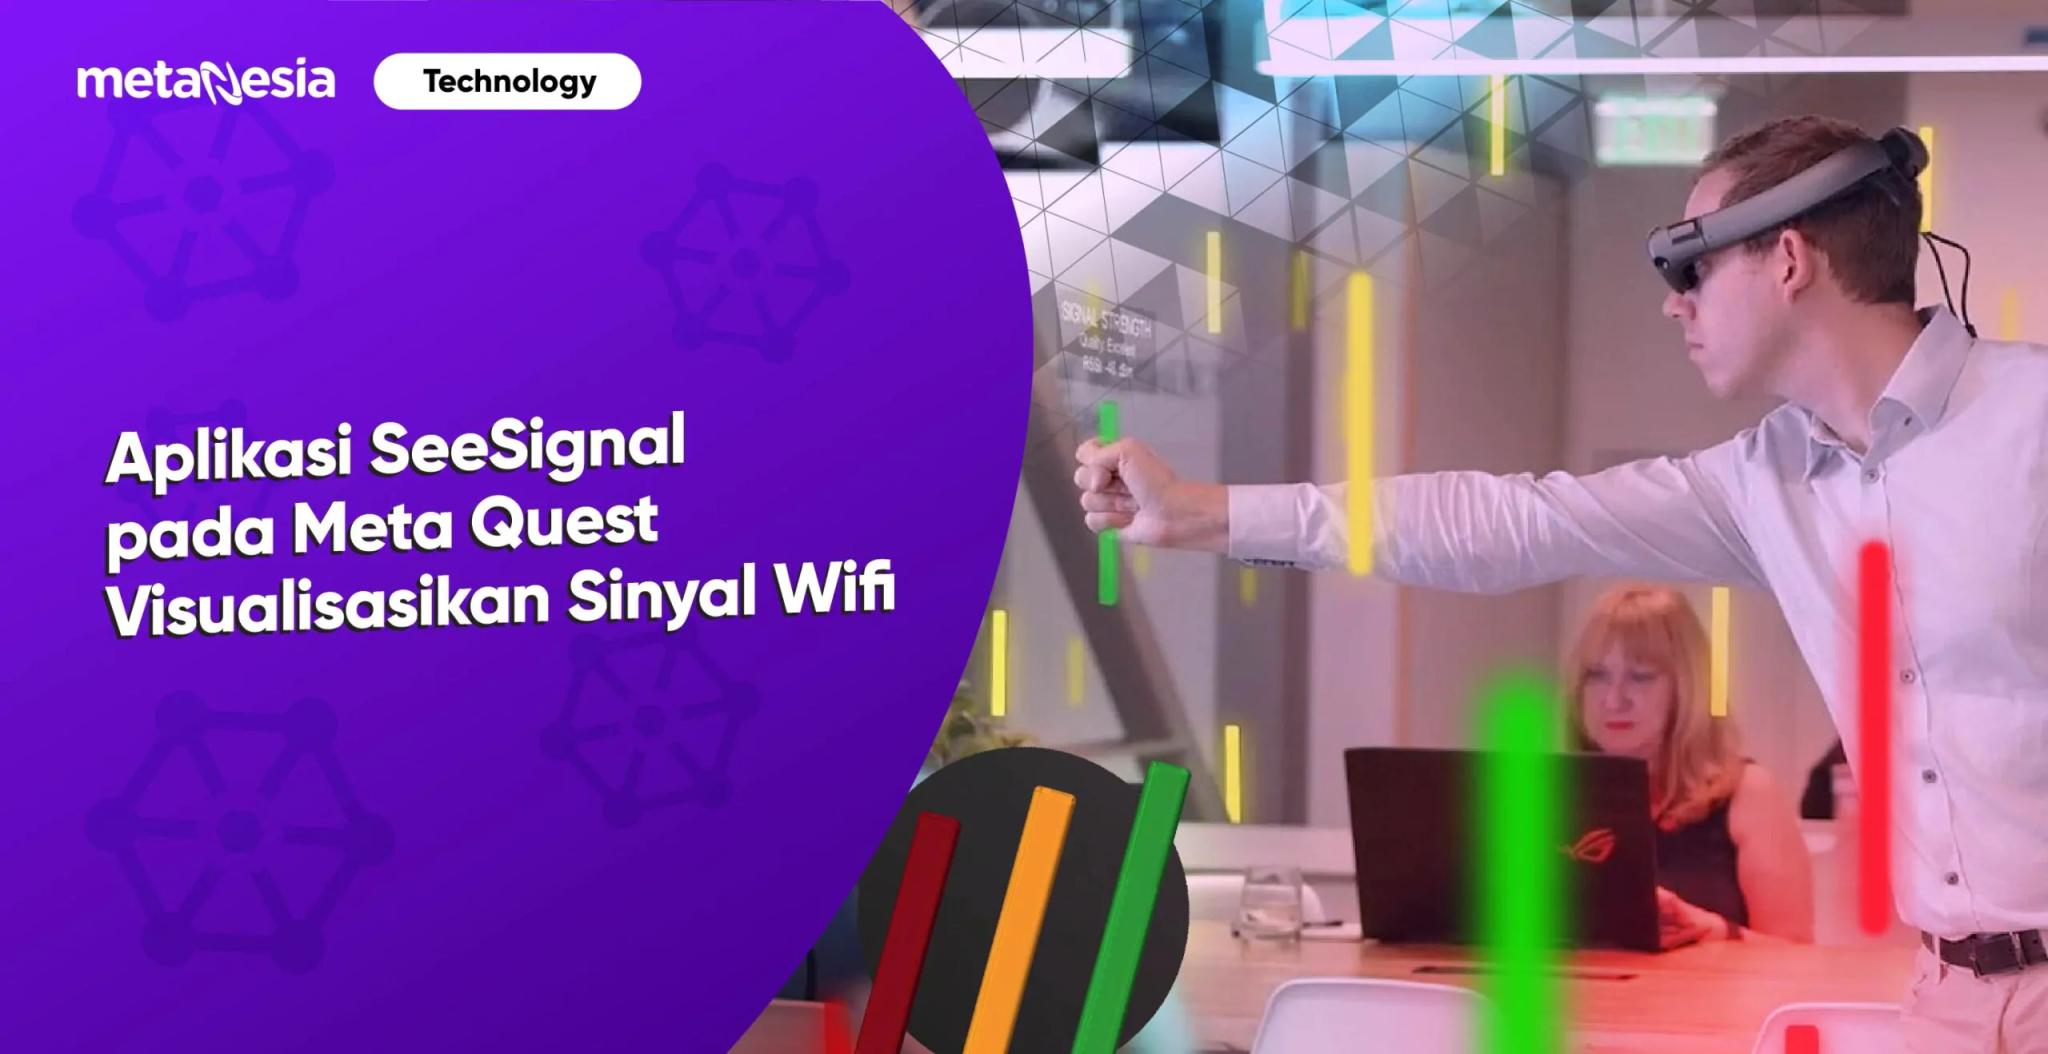 Aplikasi SeeSignal untuk Meta Quest dapat Memvisualisasikan Sinyal Wi-Fi Kamu!